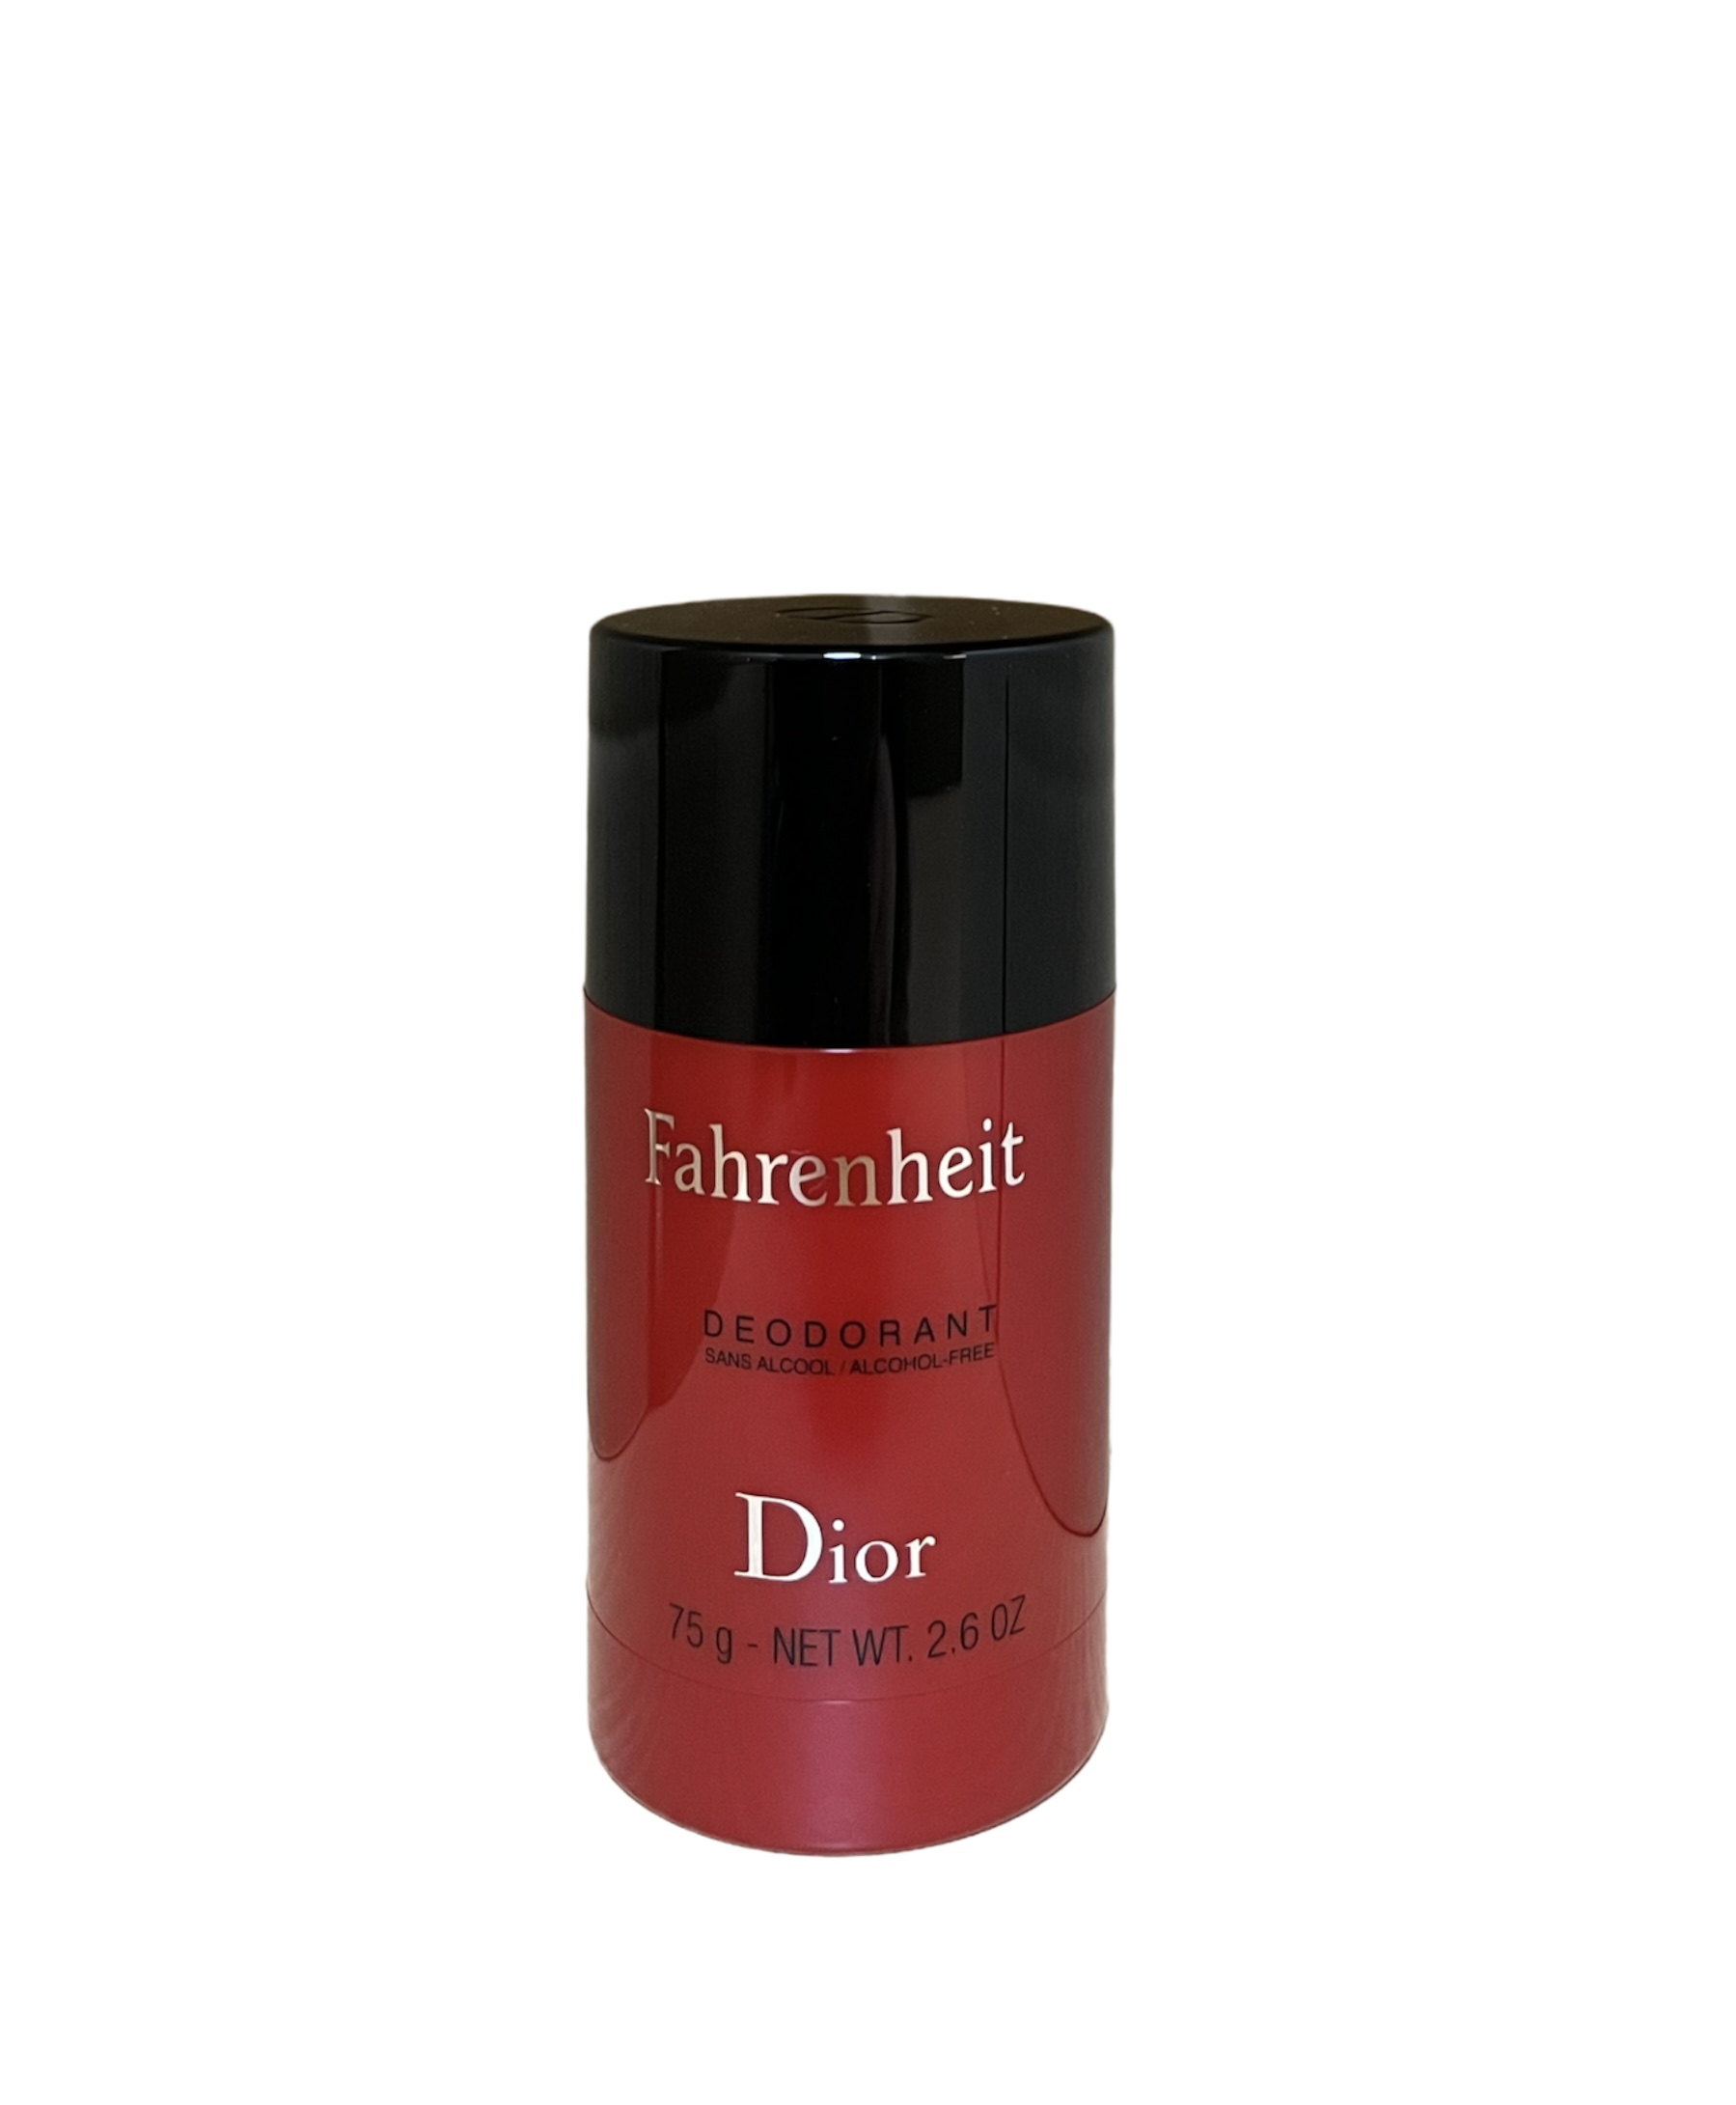 Dior Fahrenheit Deodorant Stick 75g